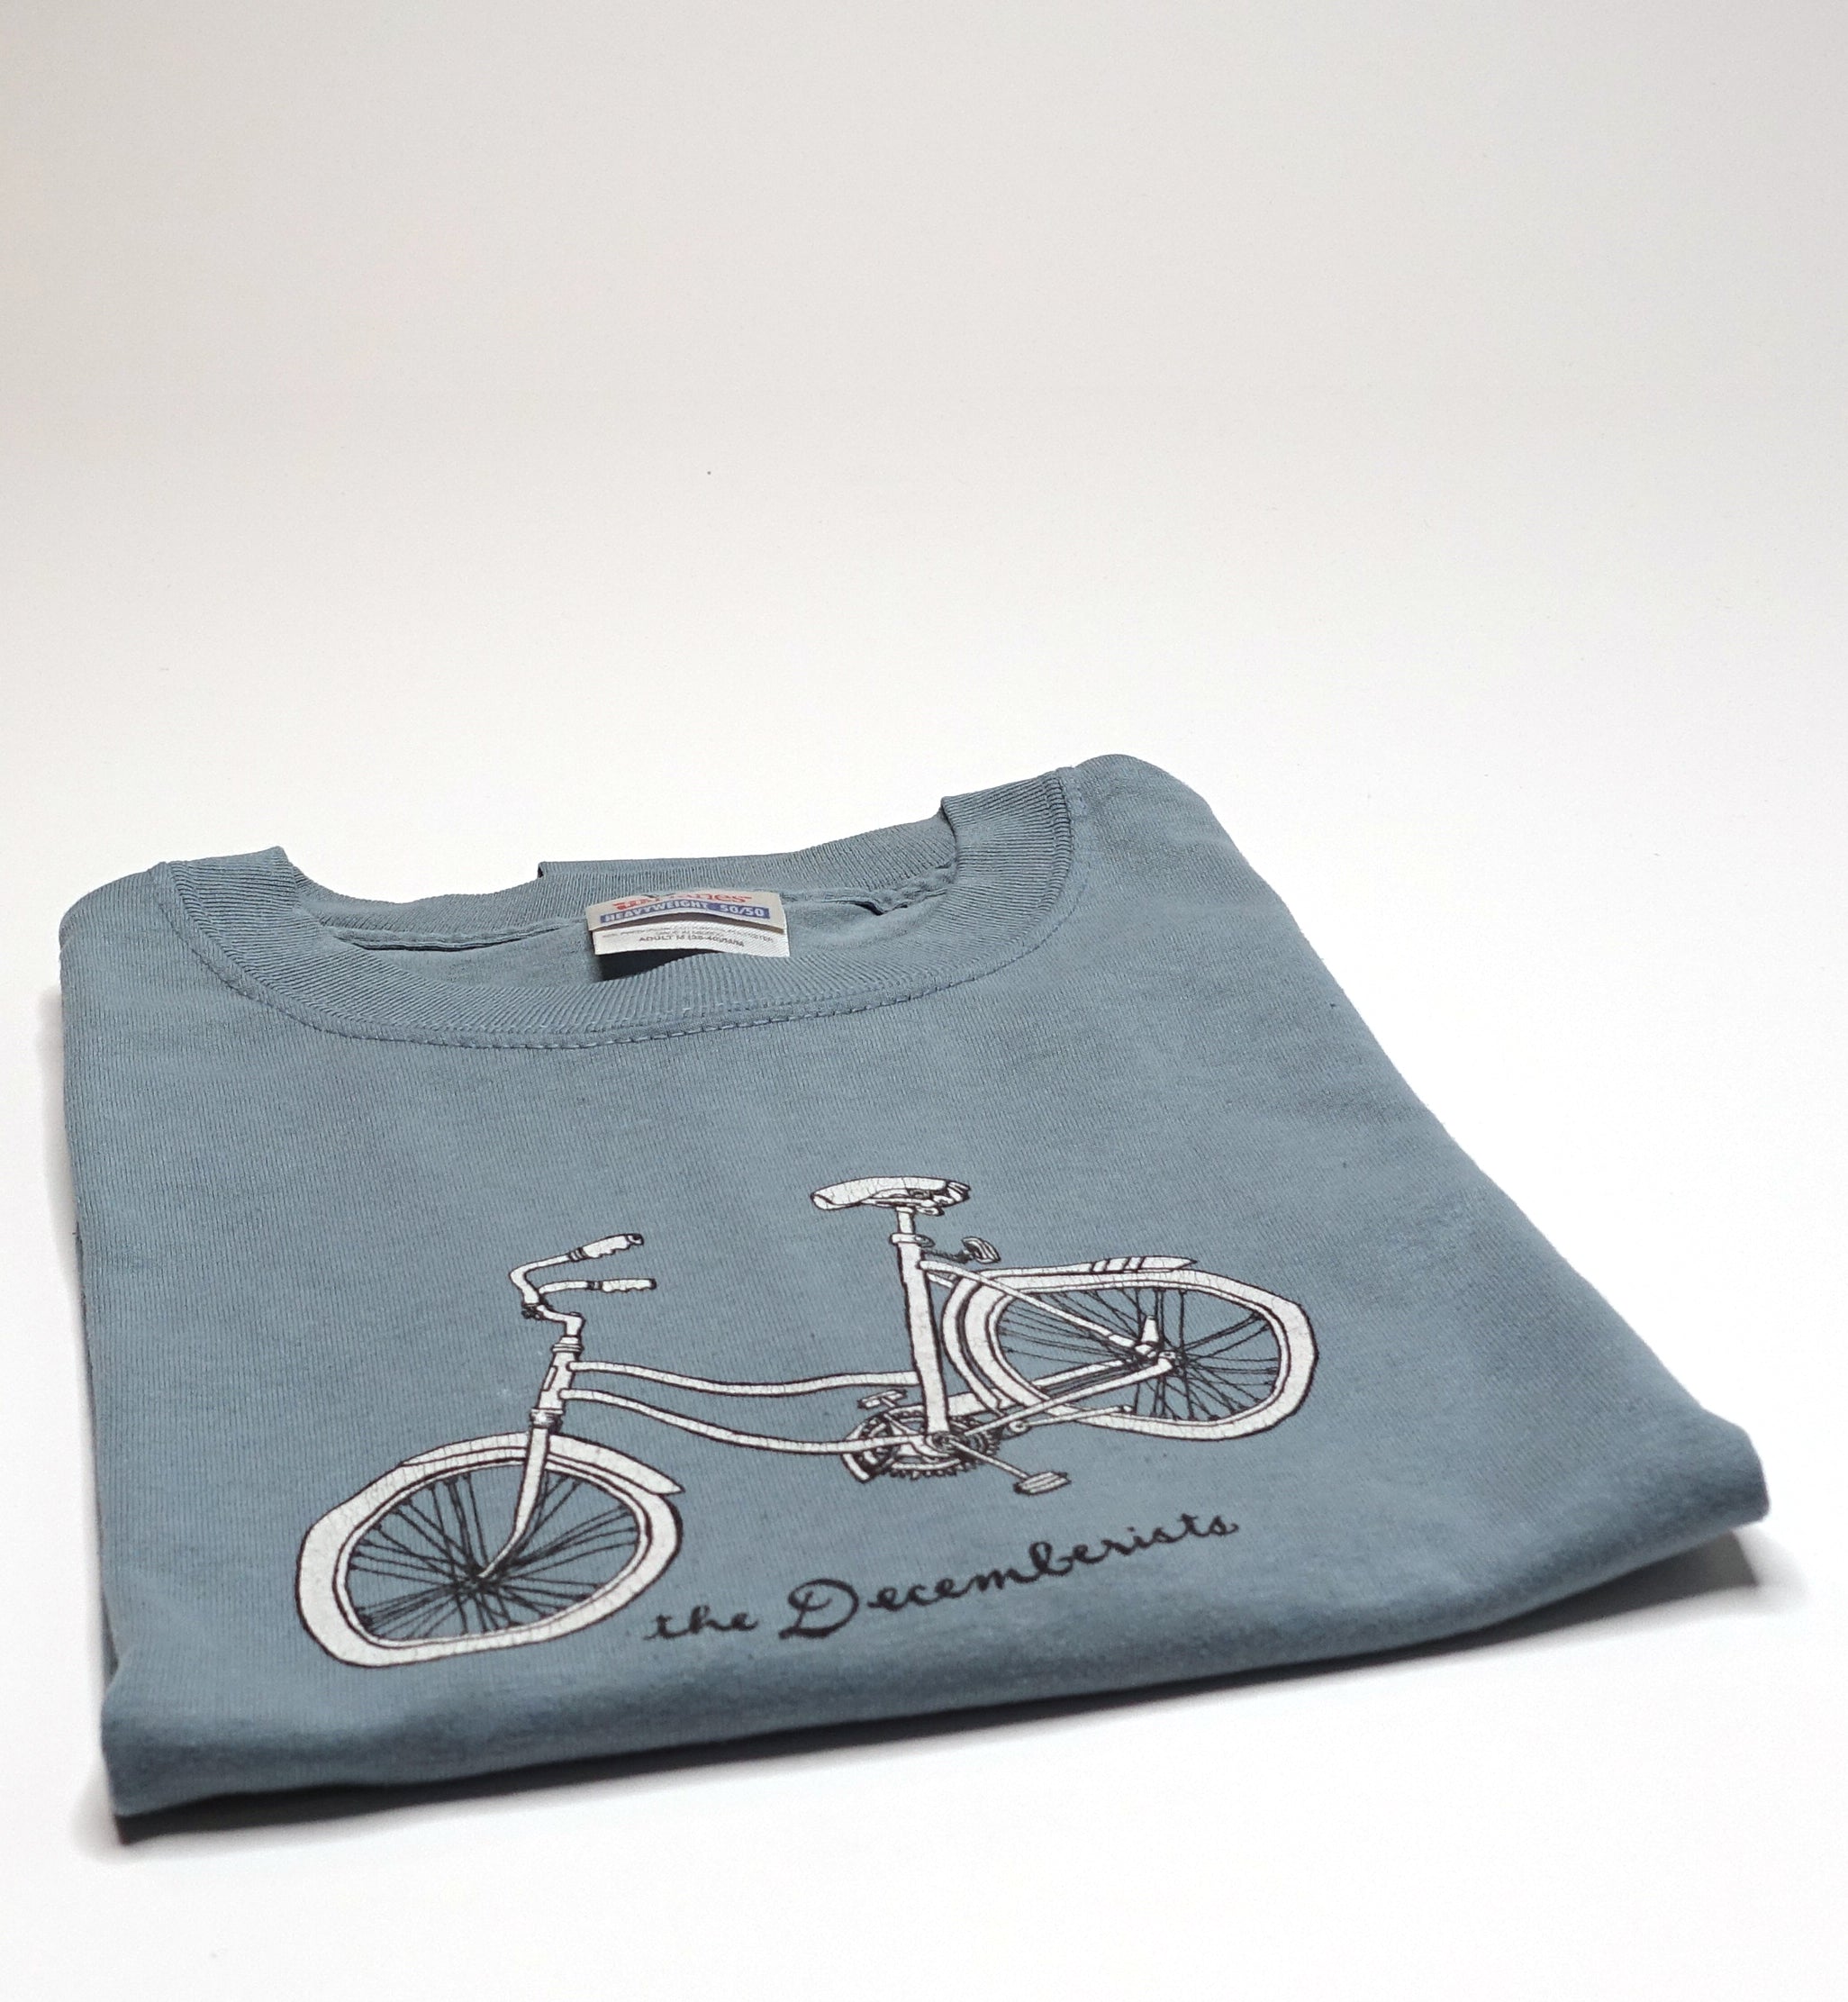 the Decemberists - Picaresque Bicycle 2005 Tour Shirt Size Medium